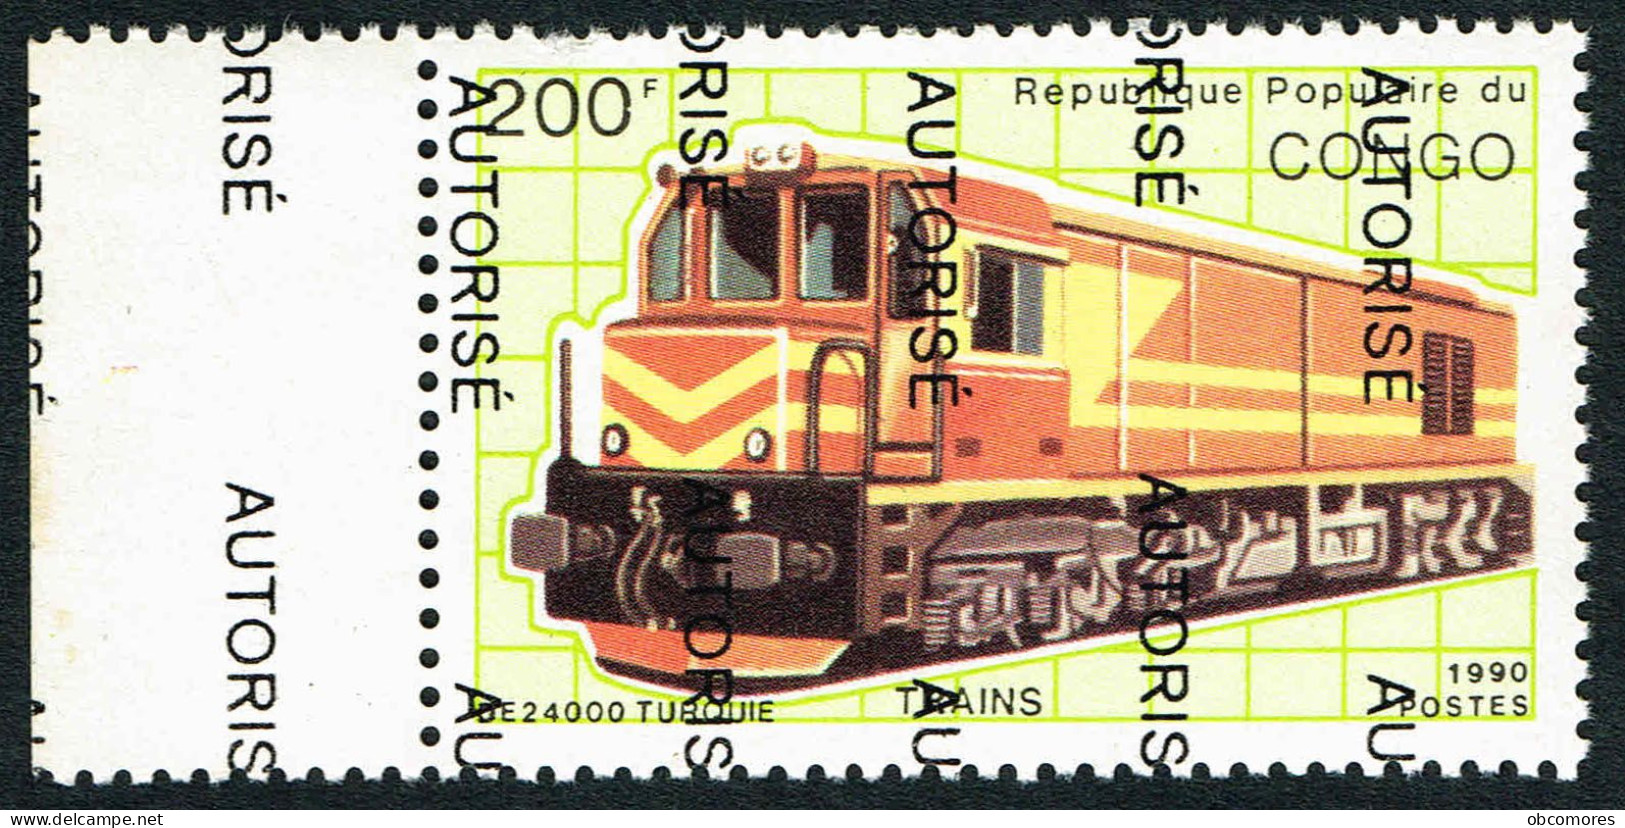 Congo Brazaville Surchargé Overprint AUTORISE 1998 - Mi 1520 - Train - Locomotive DE 24000 Turquie - MNH ** Sheet Border - Trenes